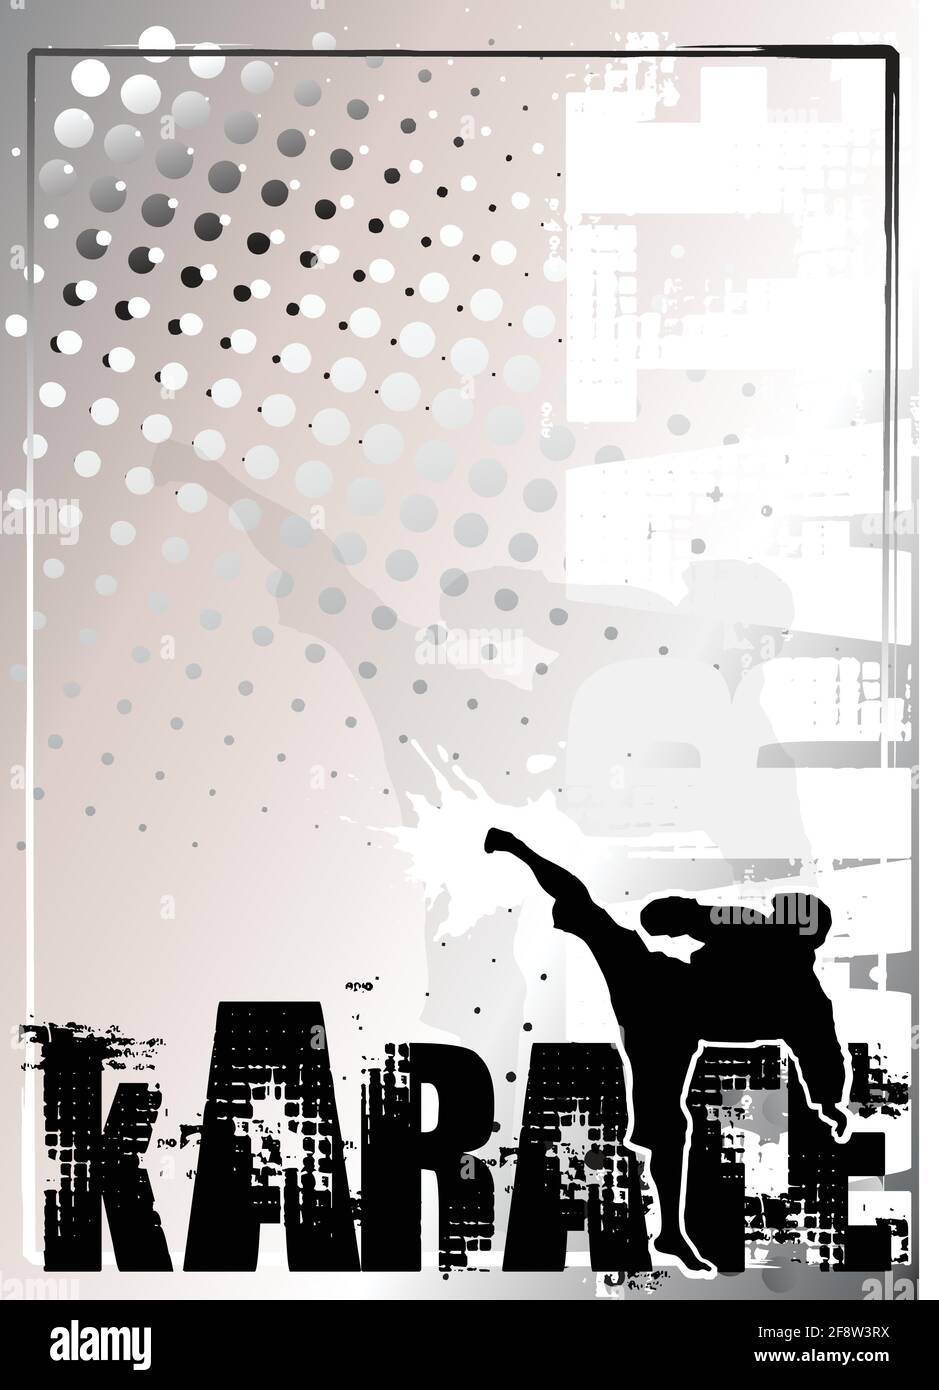 karate poster background Stock Vector Image & Art - Alamy